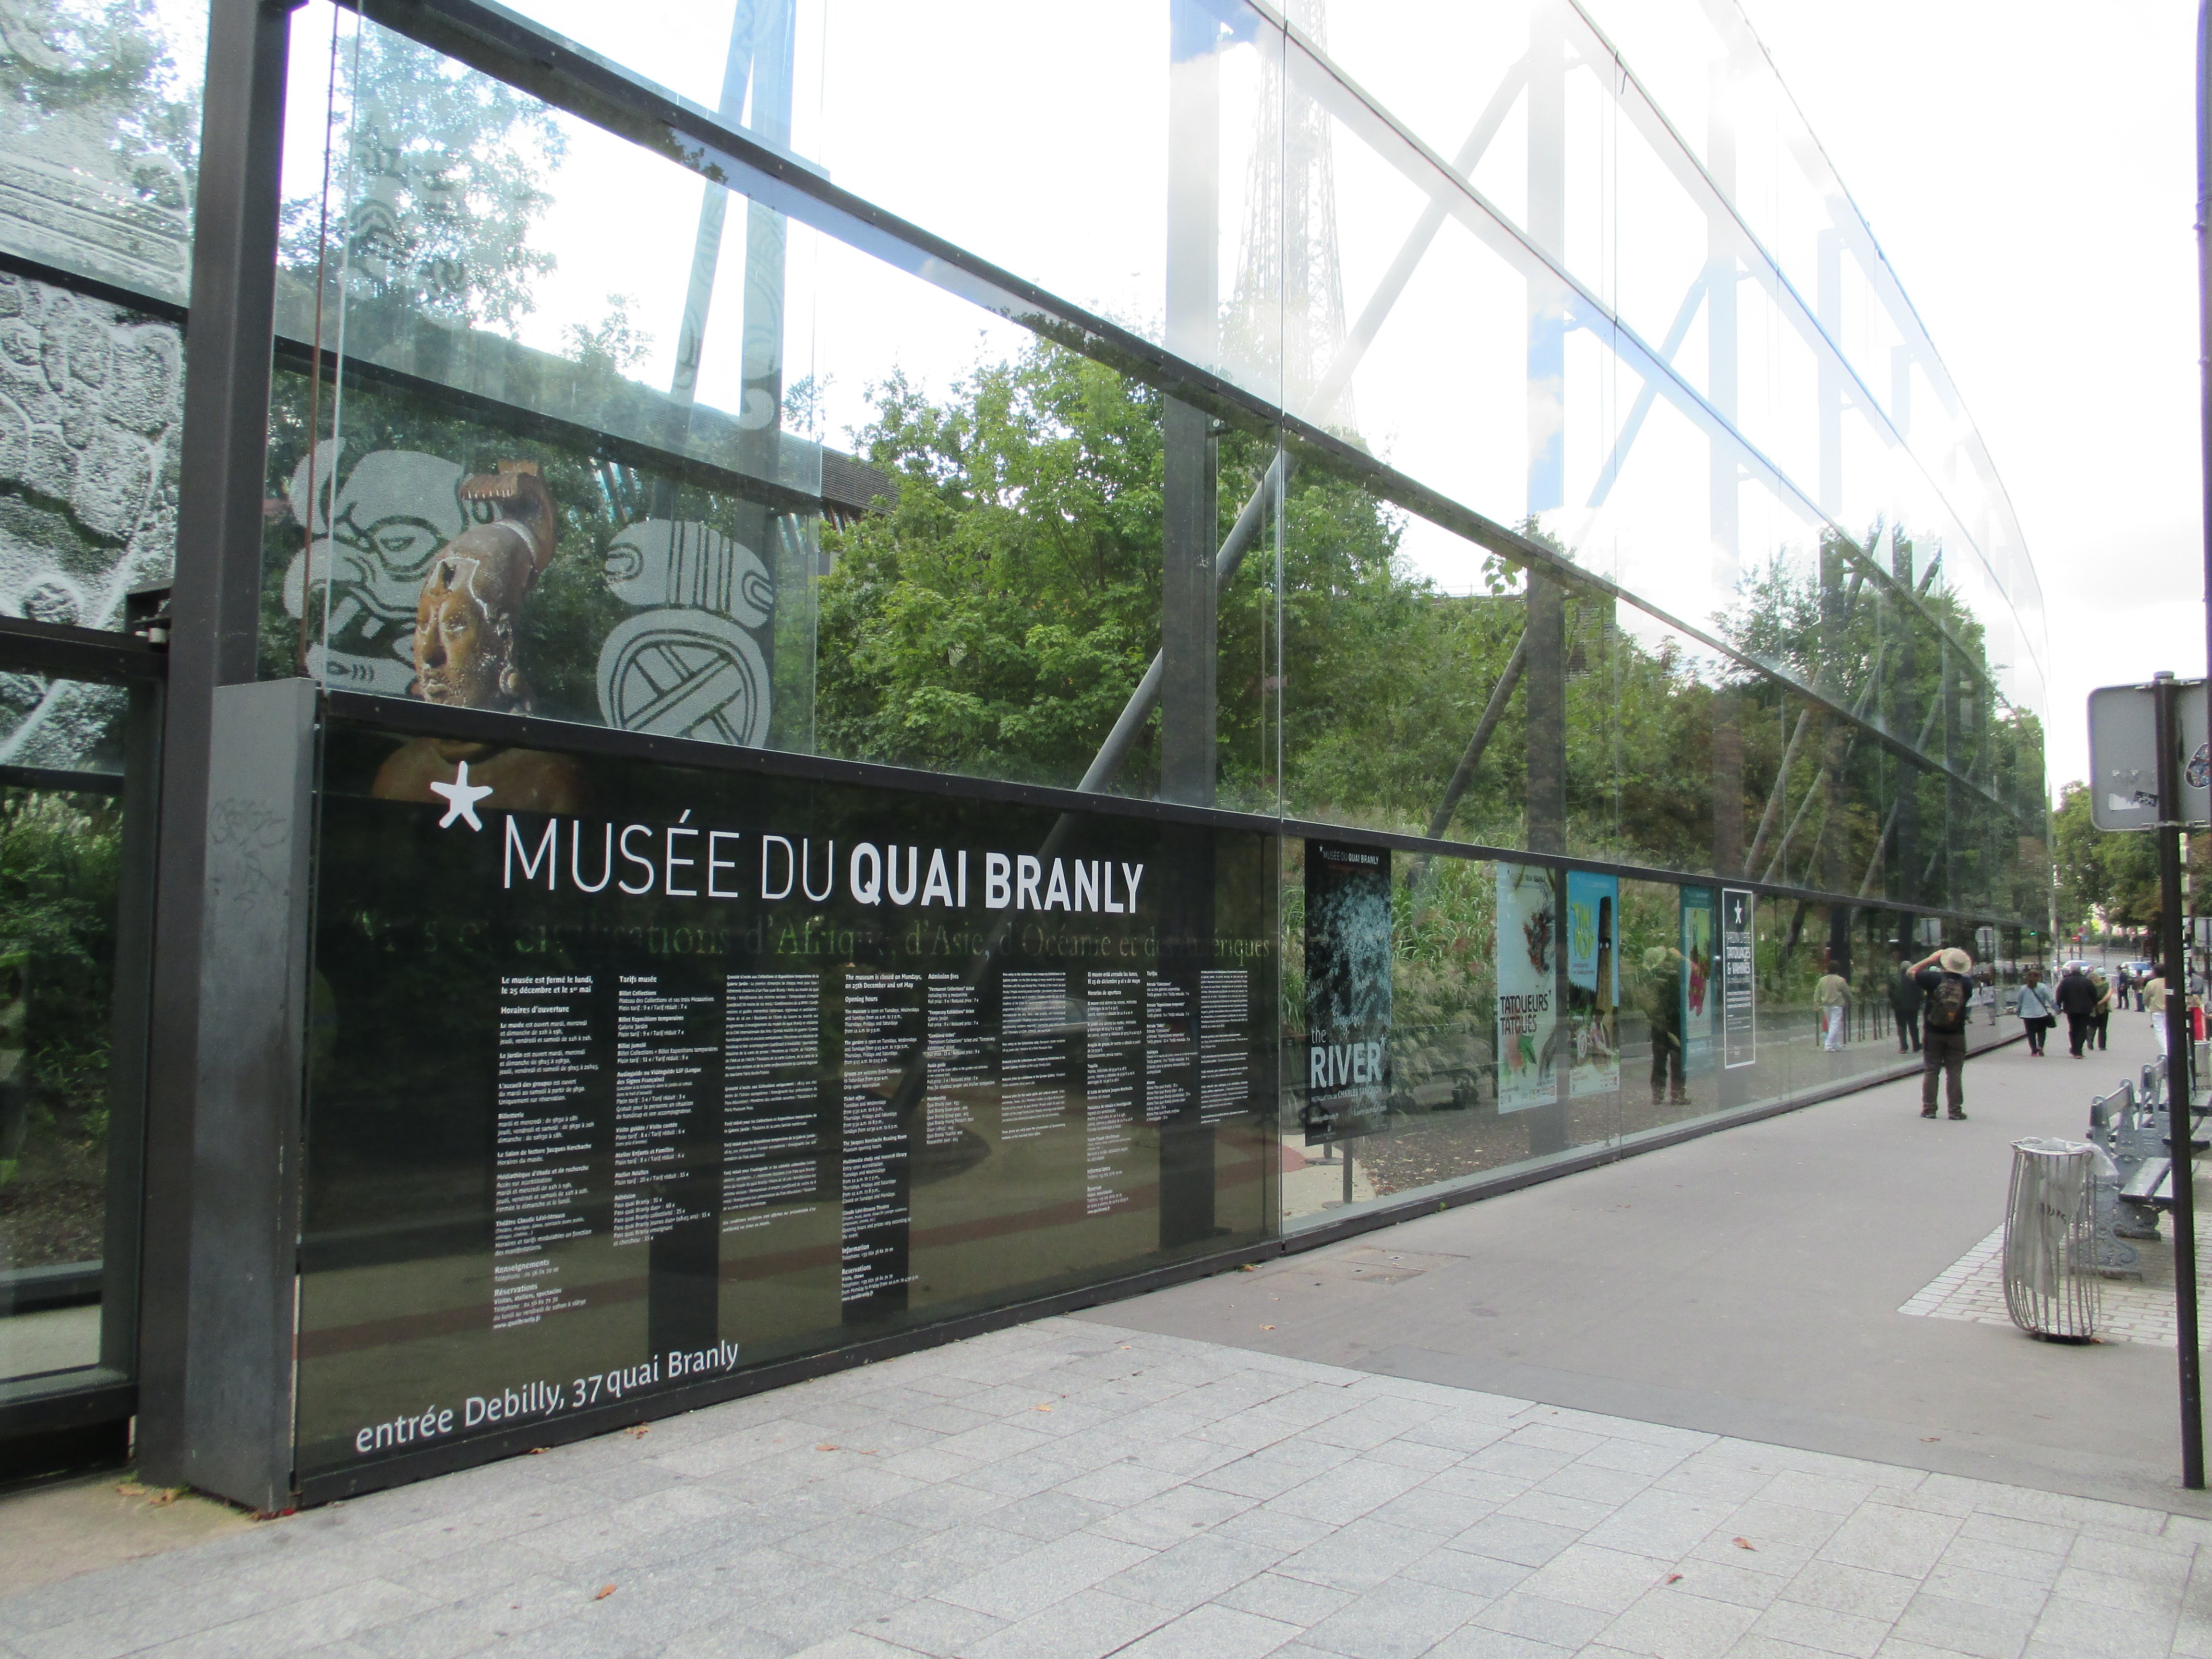 Quay Branly museum